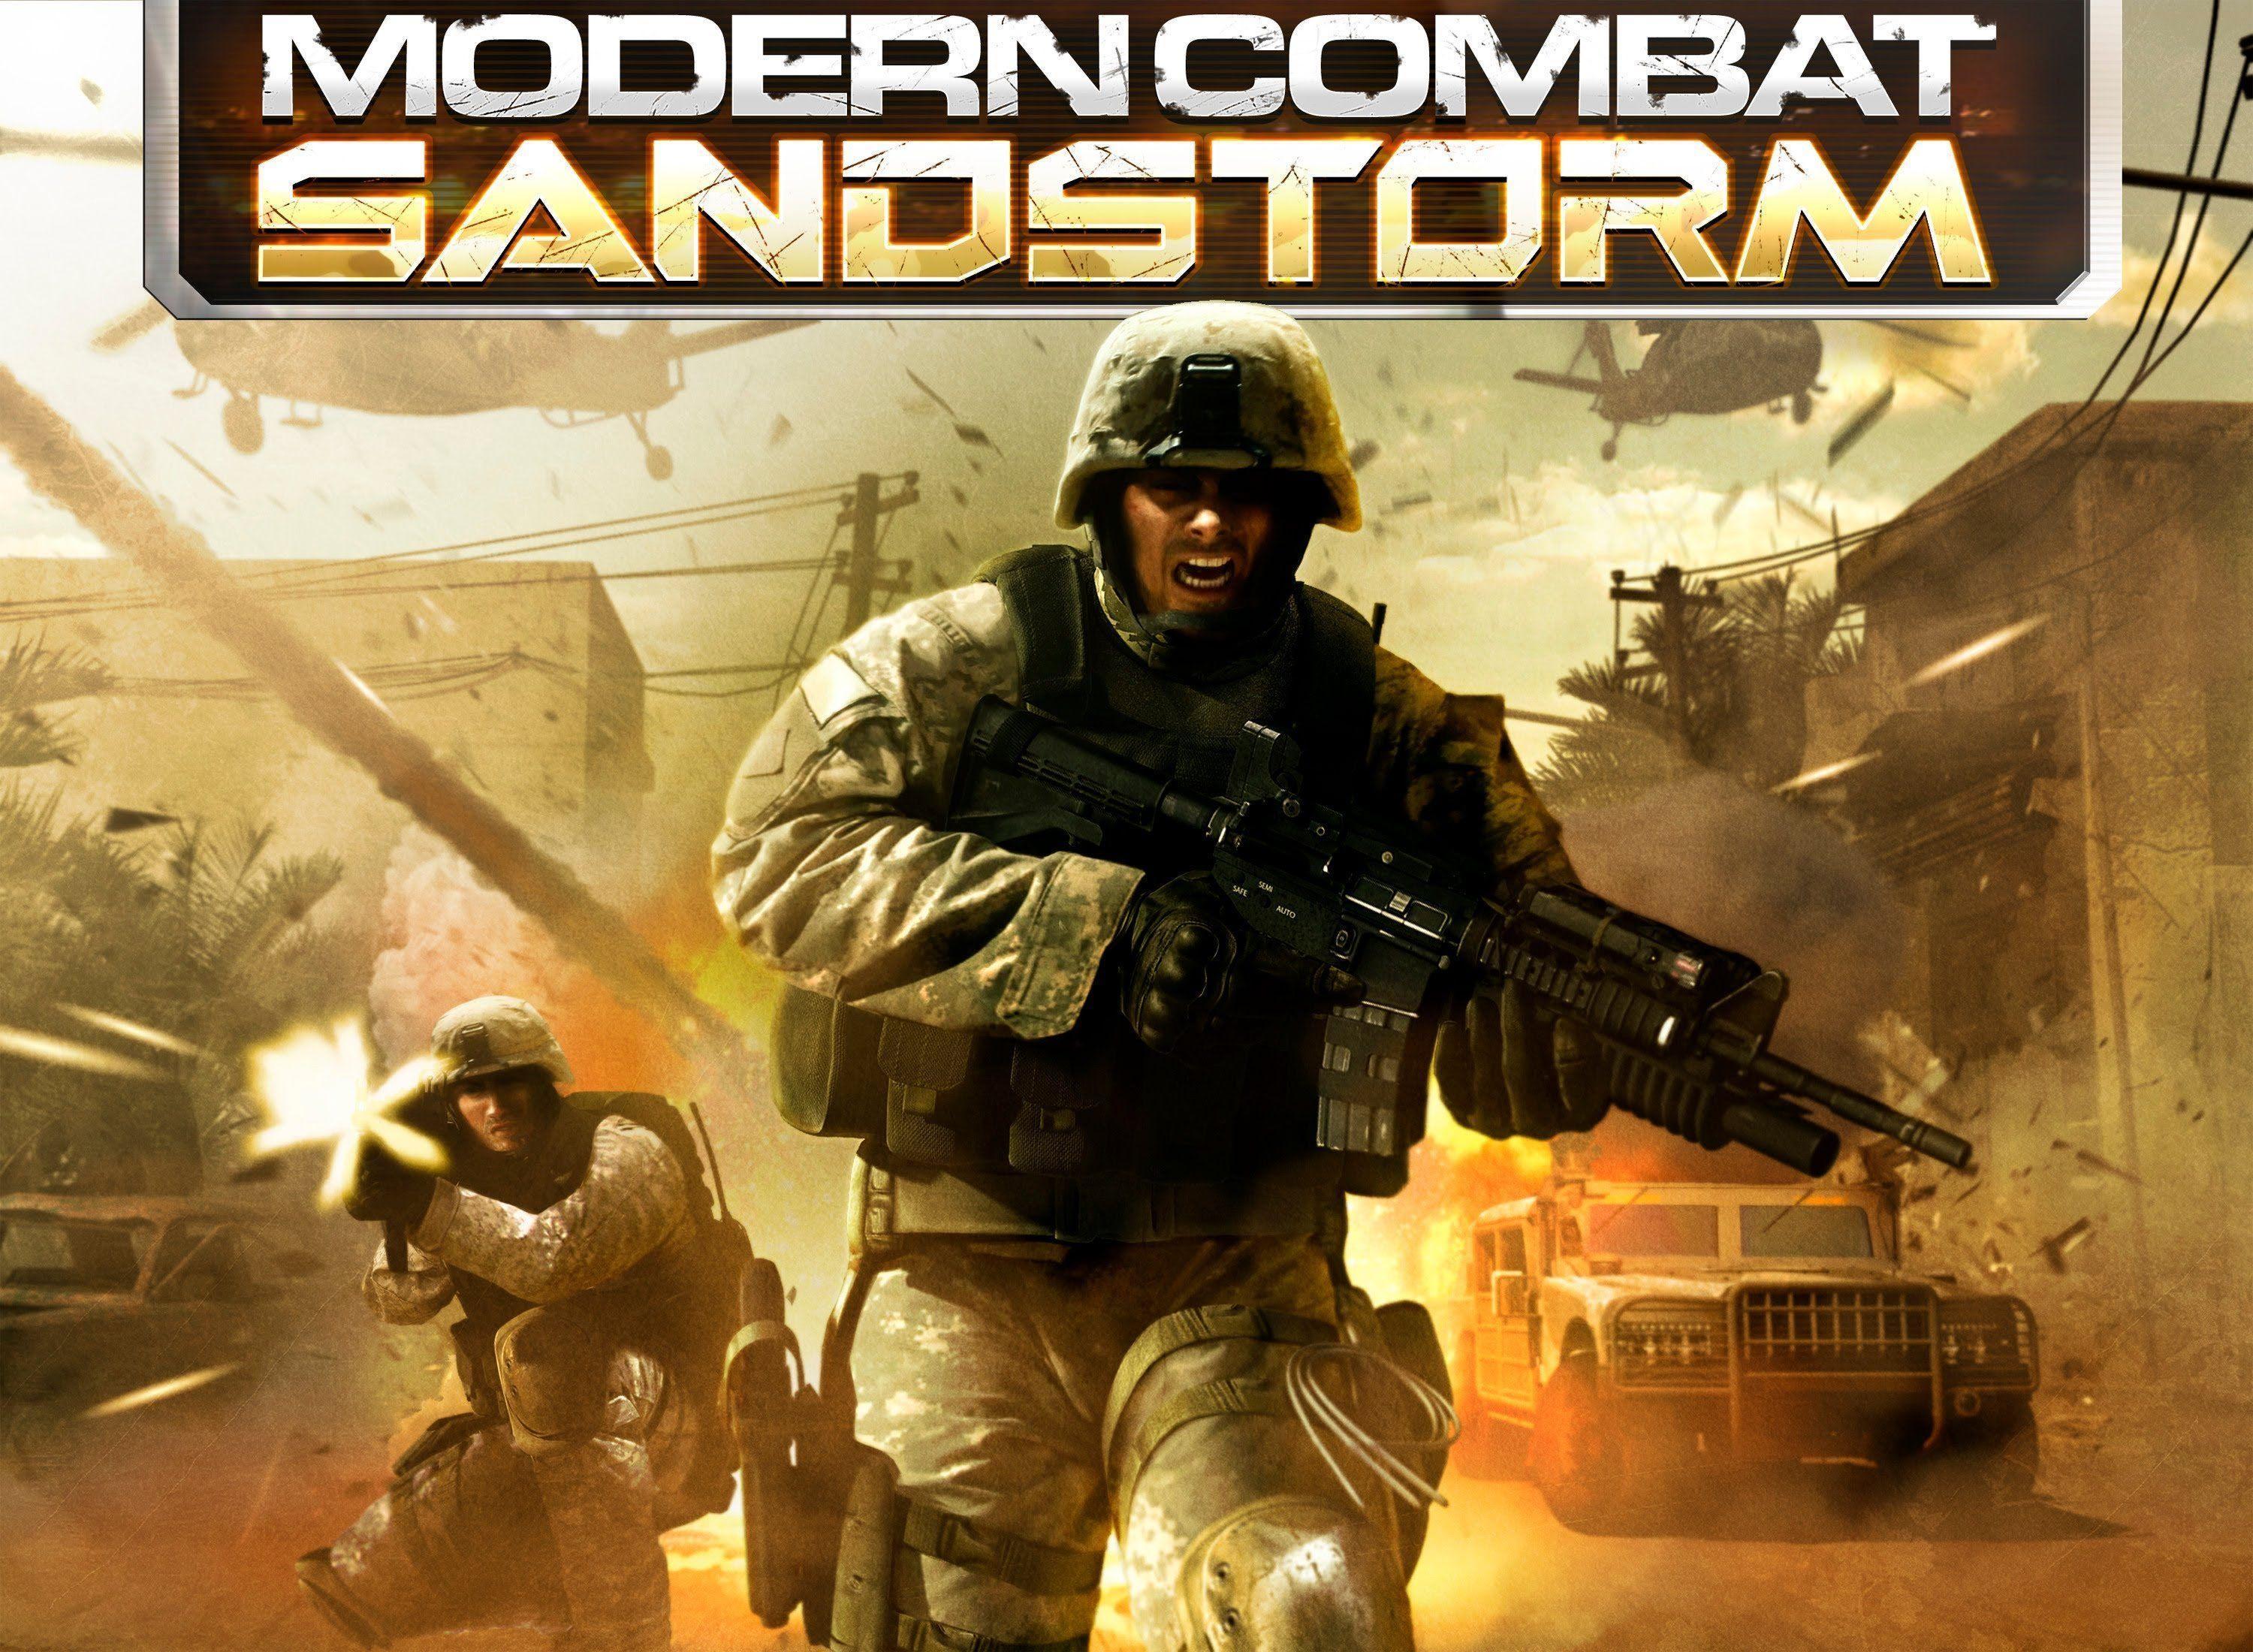 MODERN COMBAT shooter military fighting fps 1moderncombat warrior